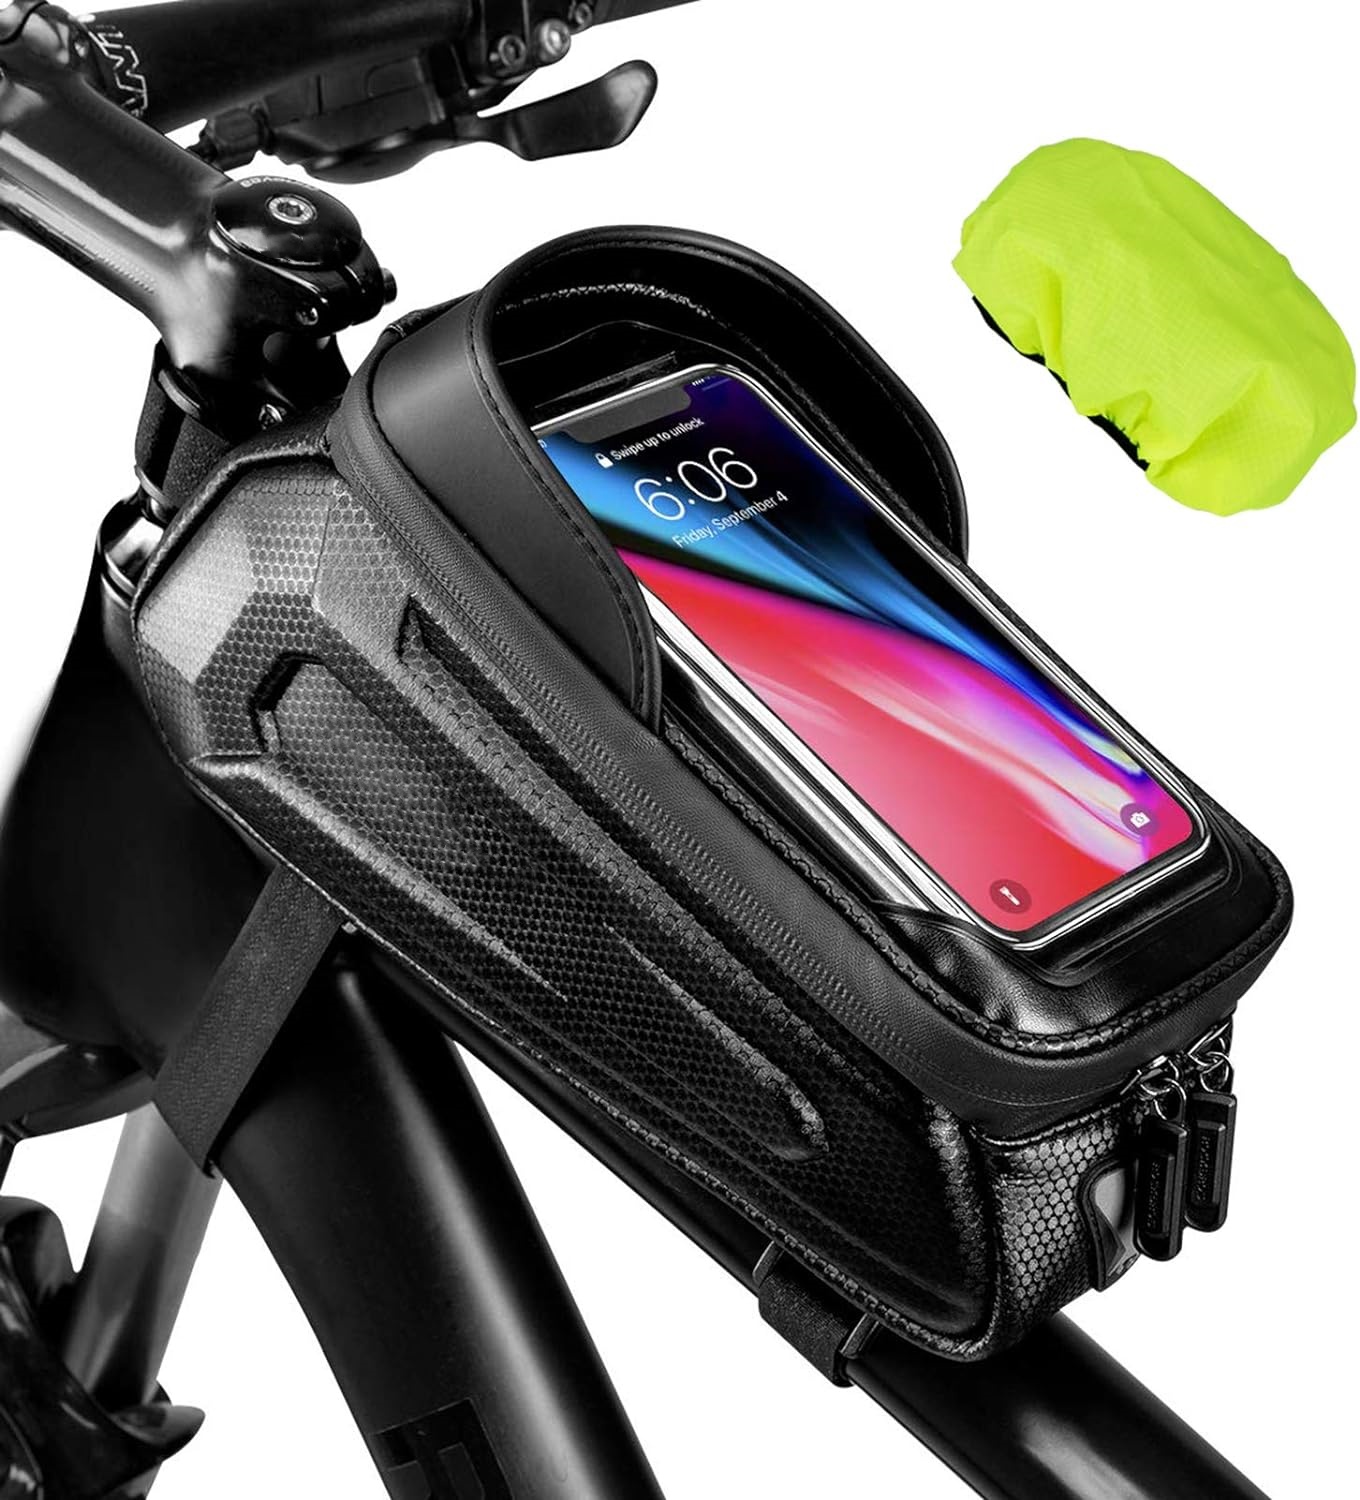 Thumba Lanjinga Phone Mount Bag Bicycle Accessories Pouch